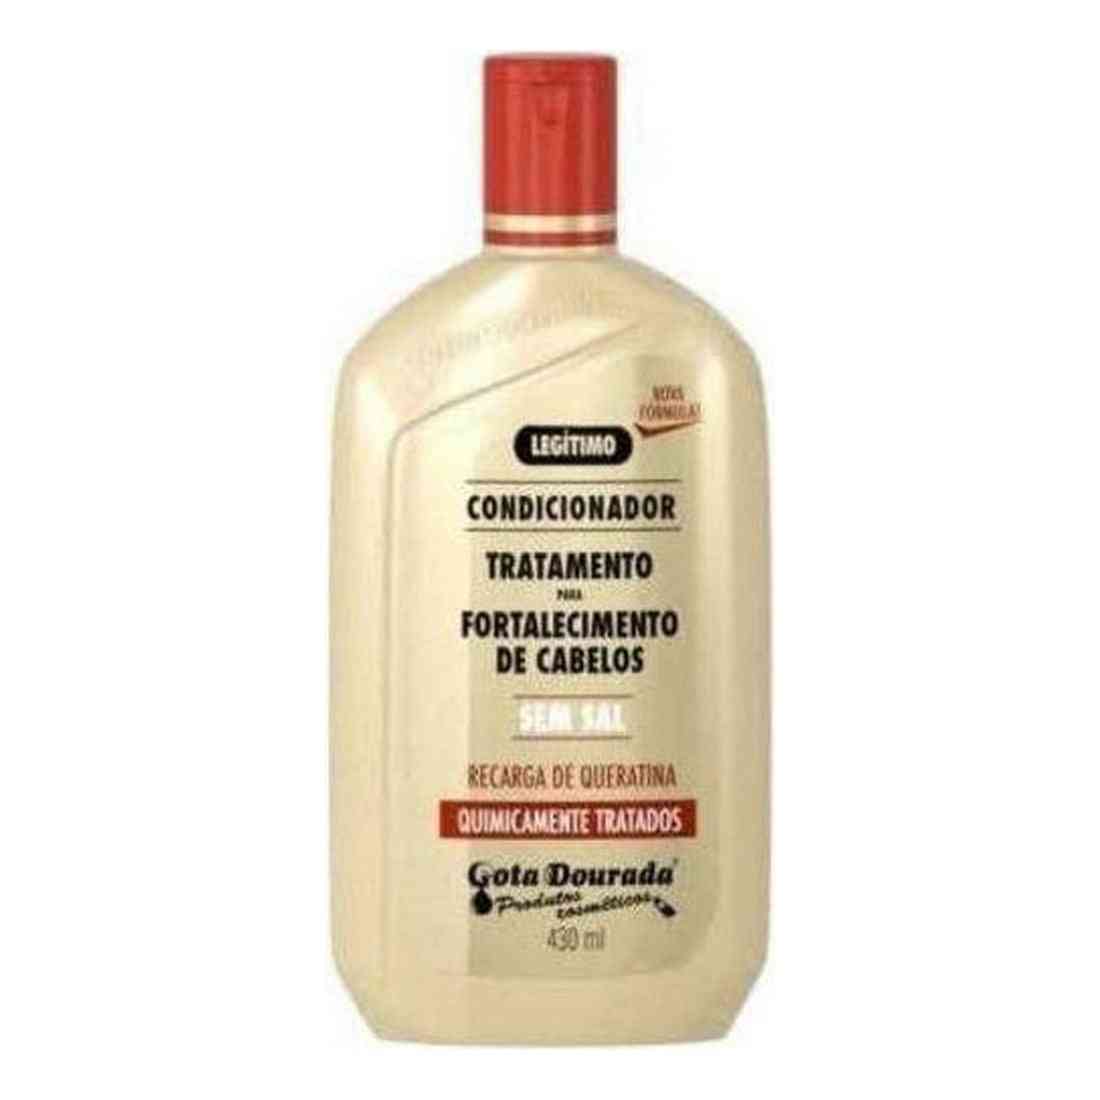 apres shampooing legitimo keratine 430 ml